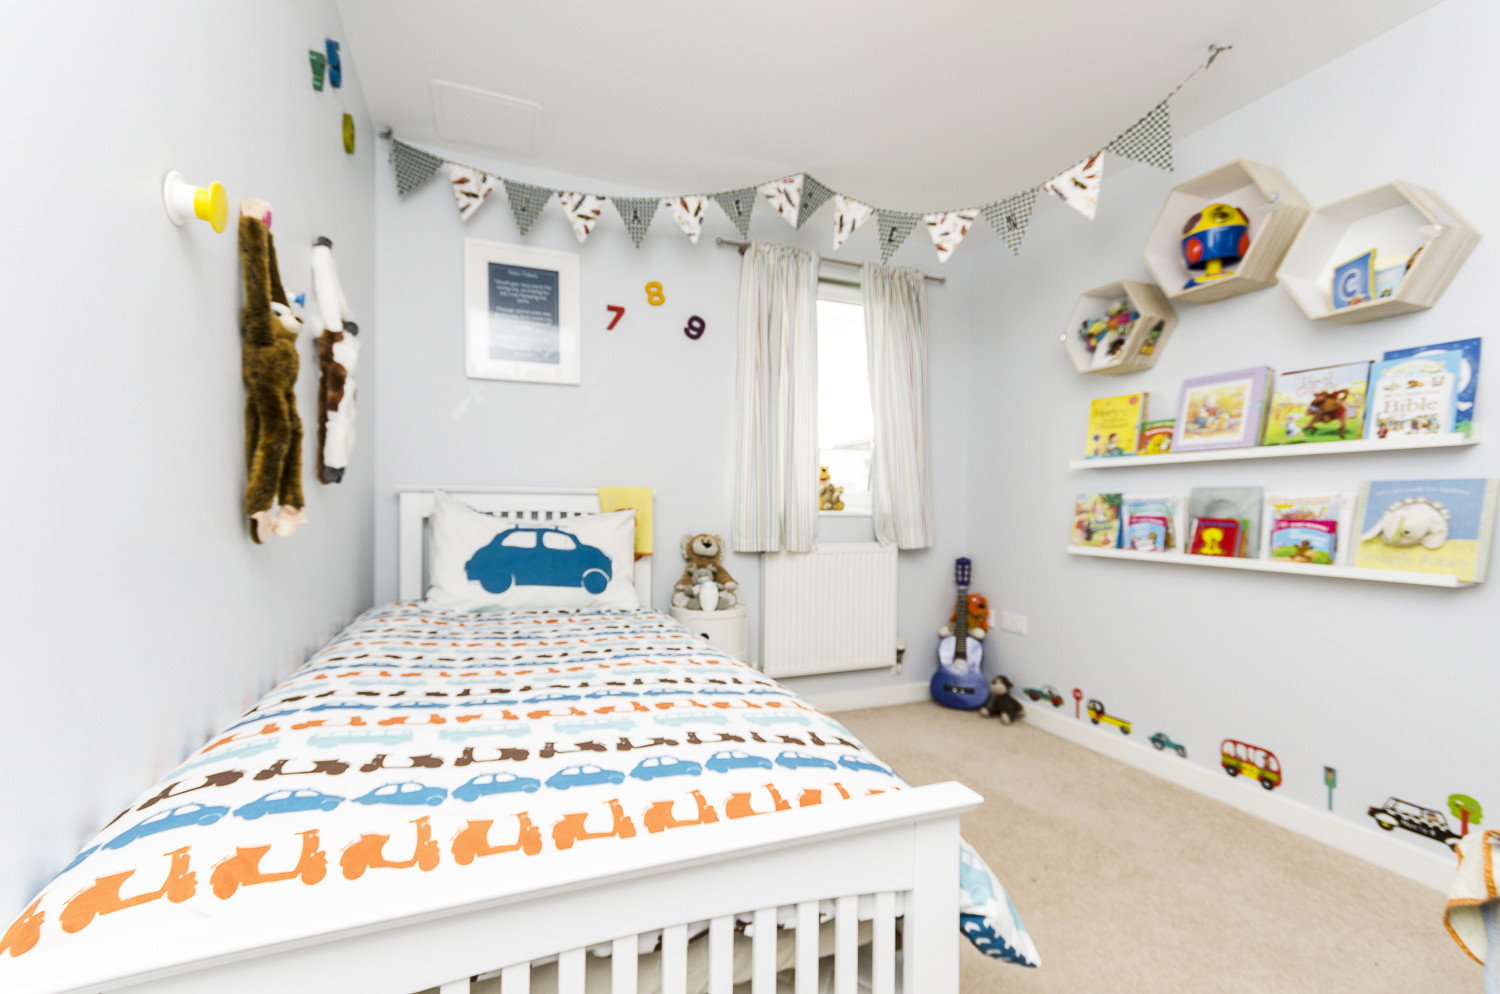 Bedroom Decor Kids
 27 Stylish Ways to Decorate your Children s Bedroom The